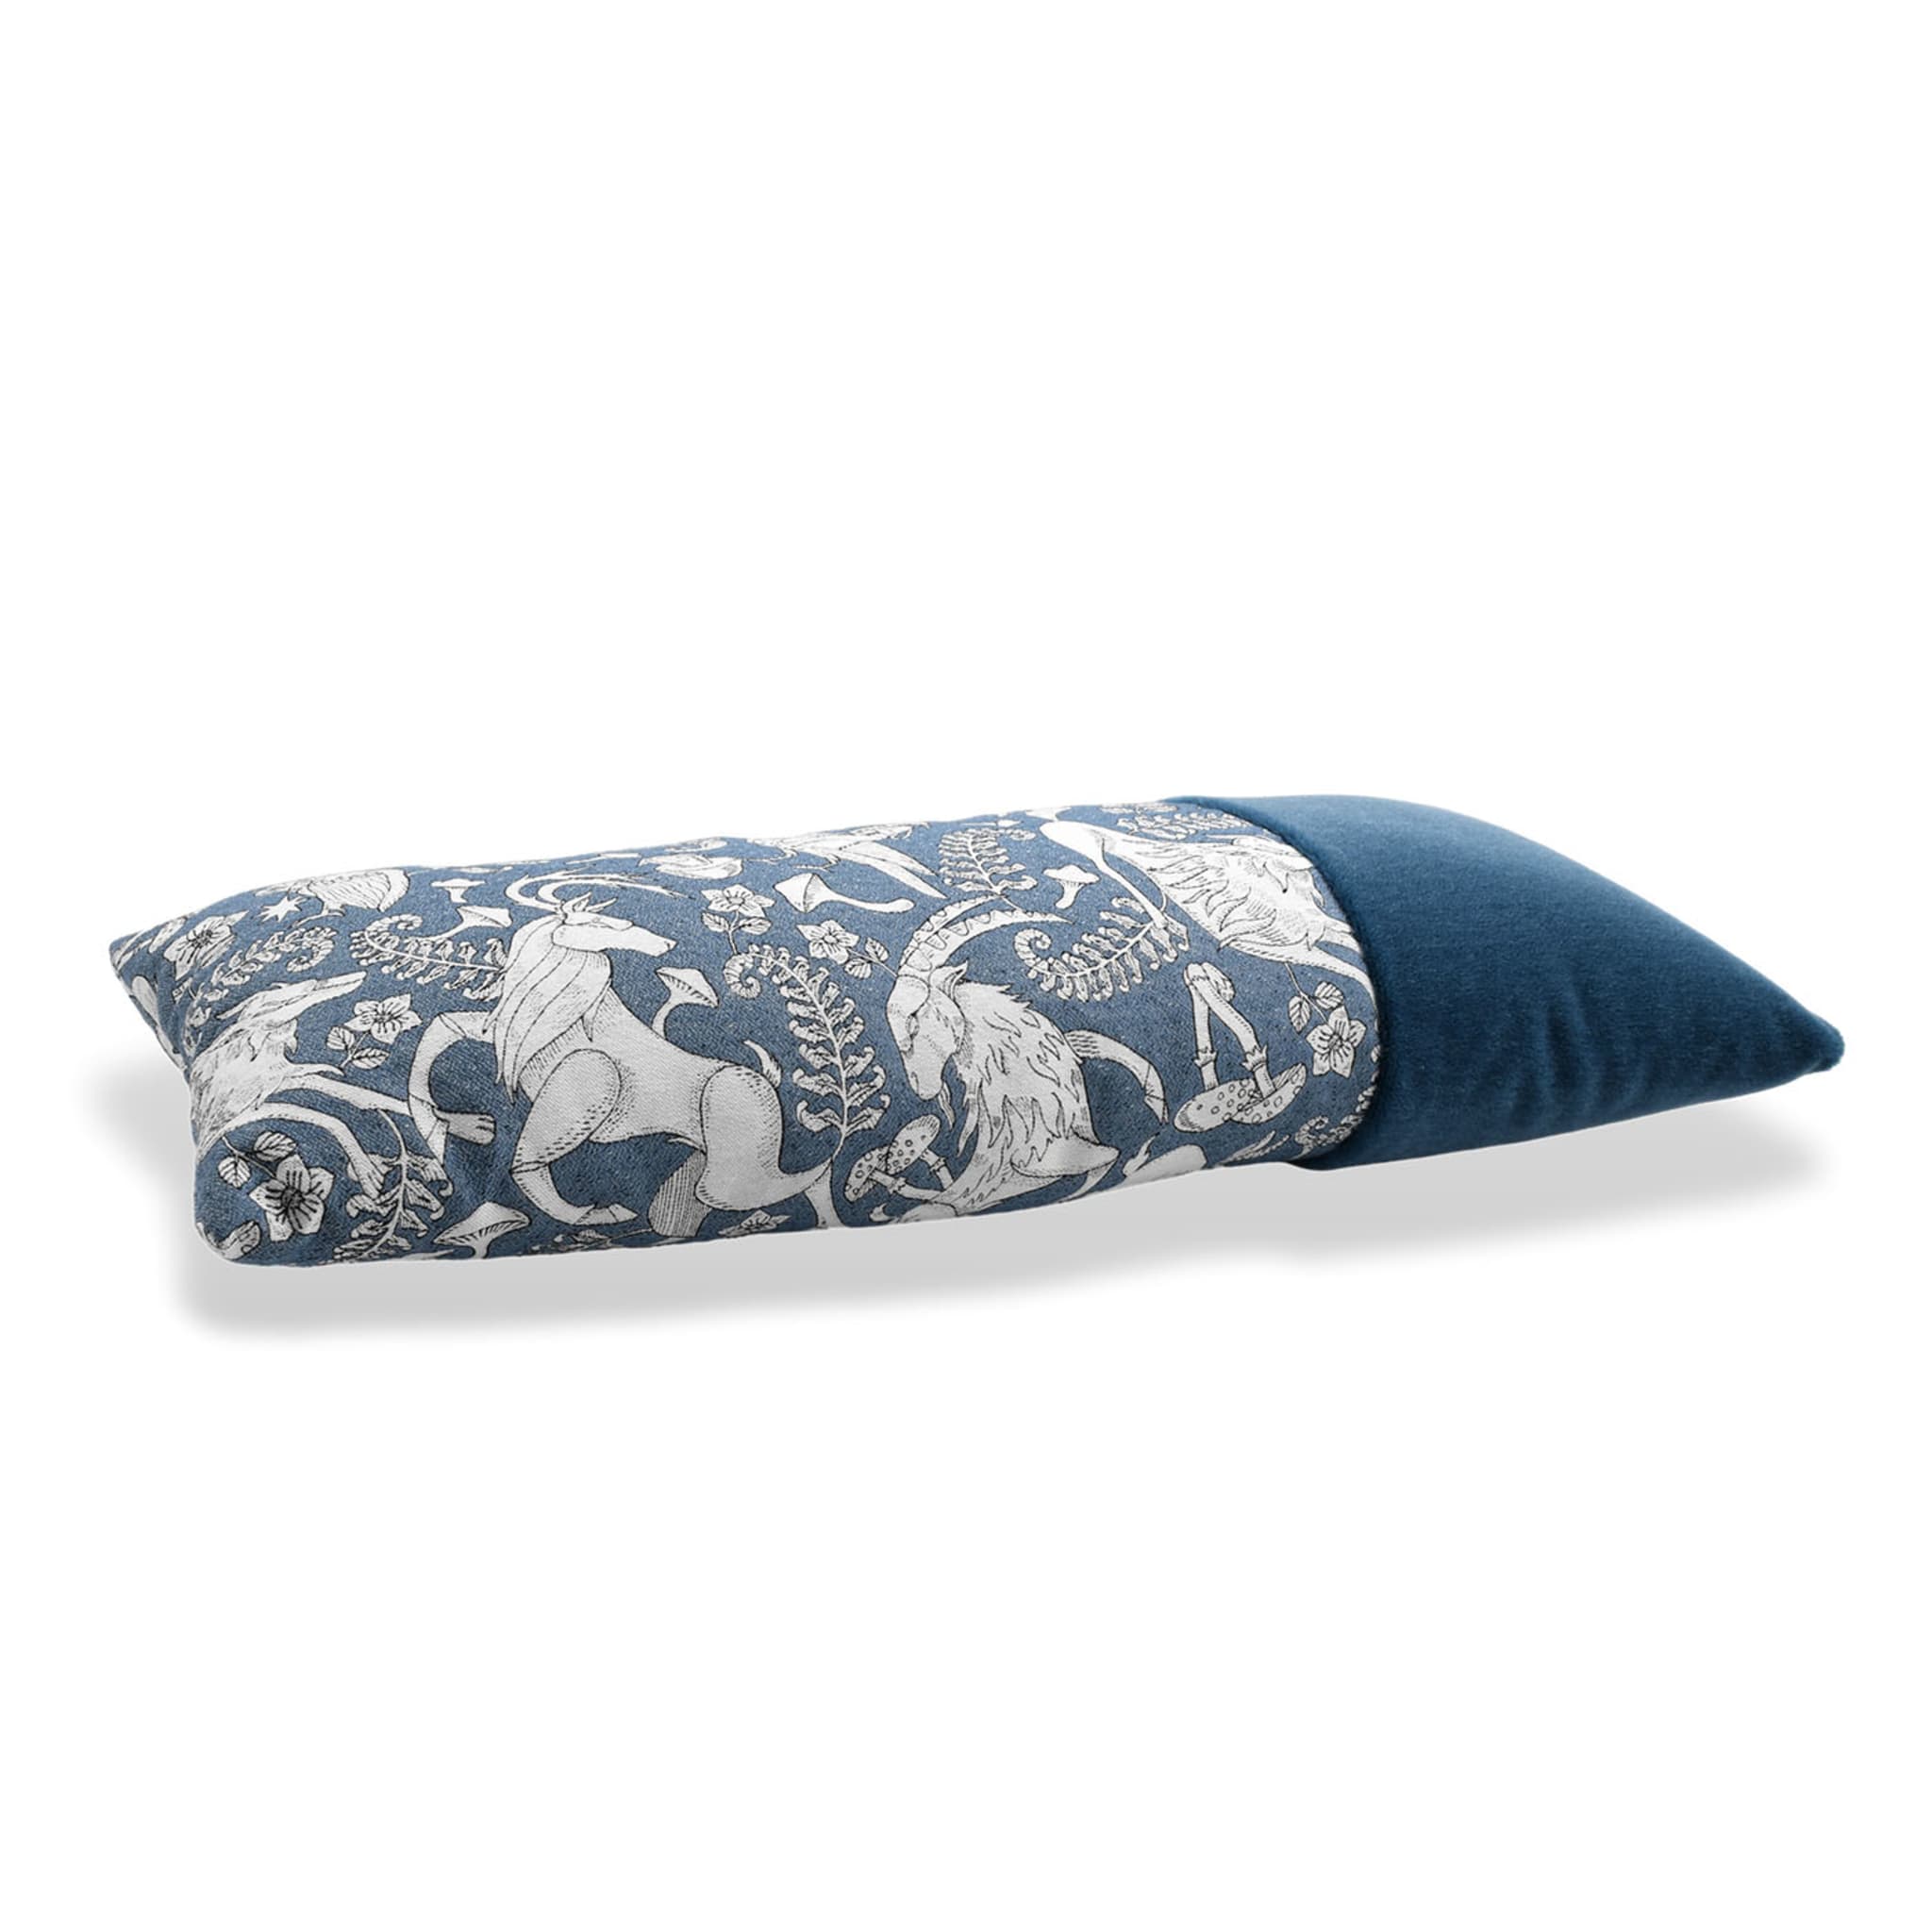 Rectangular Simple Cushion in Montagna Magica jacquard fabric - Alternative view 1